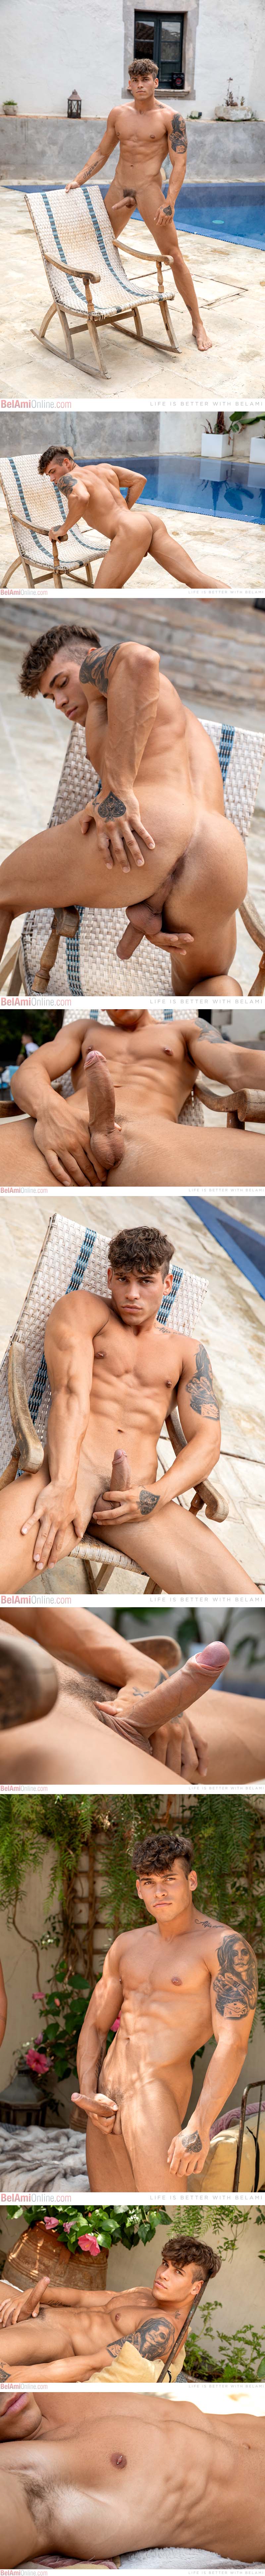 Kyle Brady [Model of the Week] at BelAmiOnline